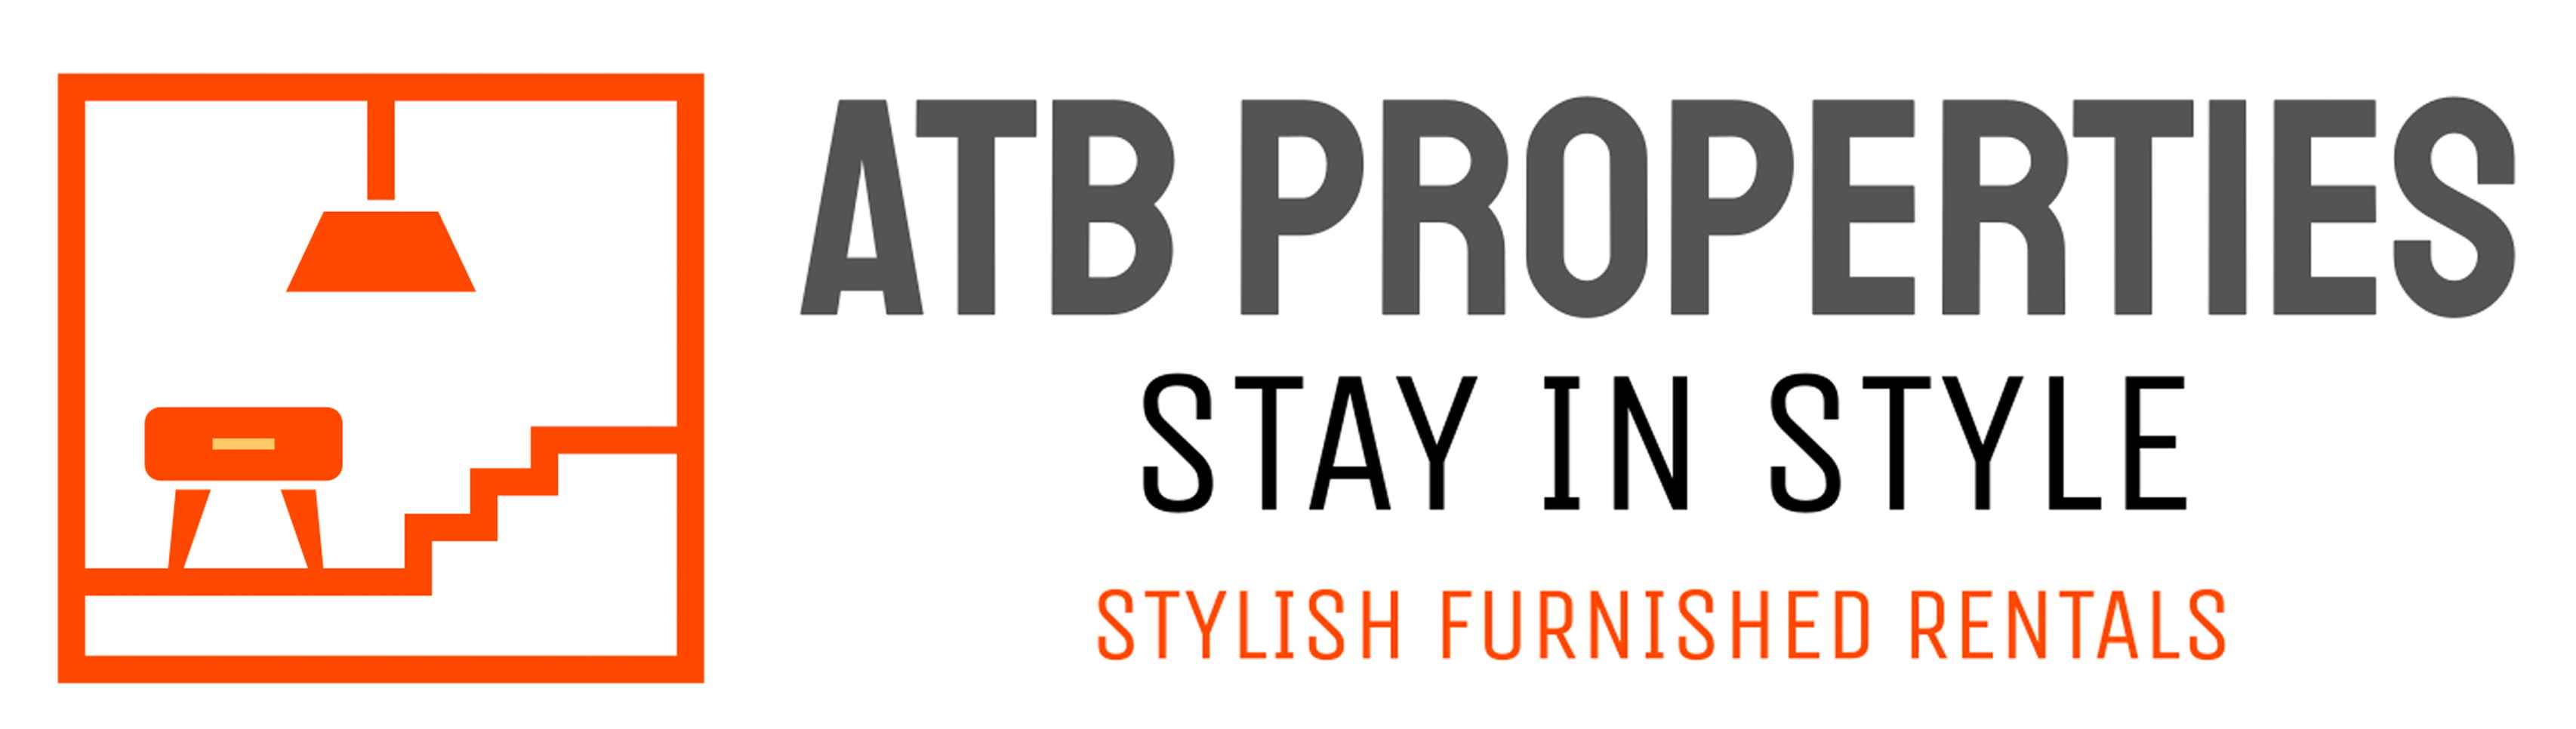 ATB Properties | Stylish Furnished Rentals logo